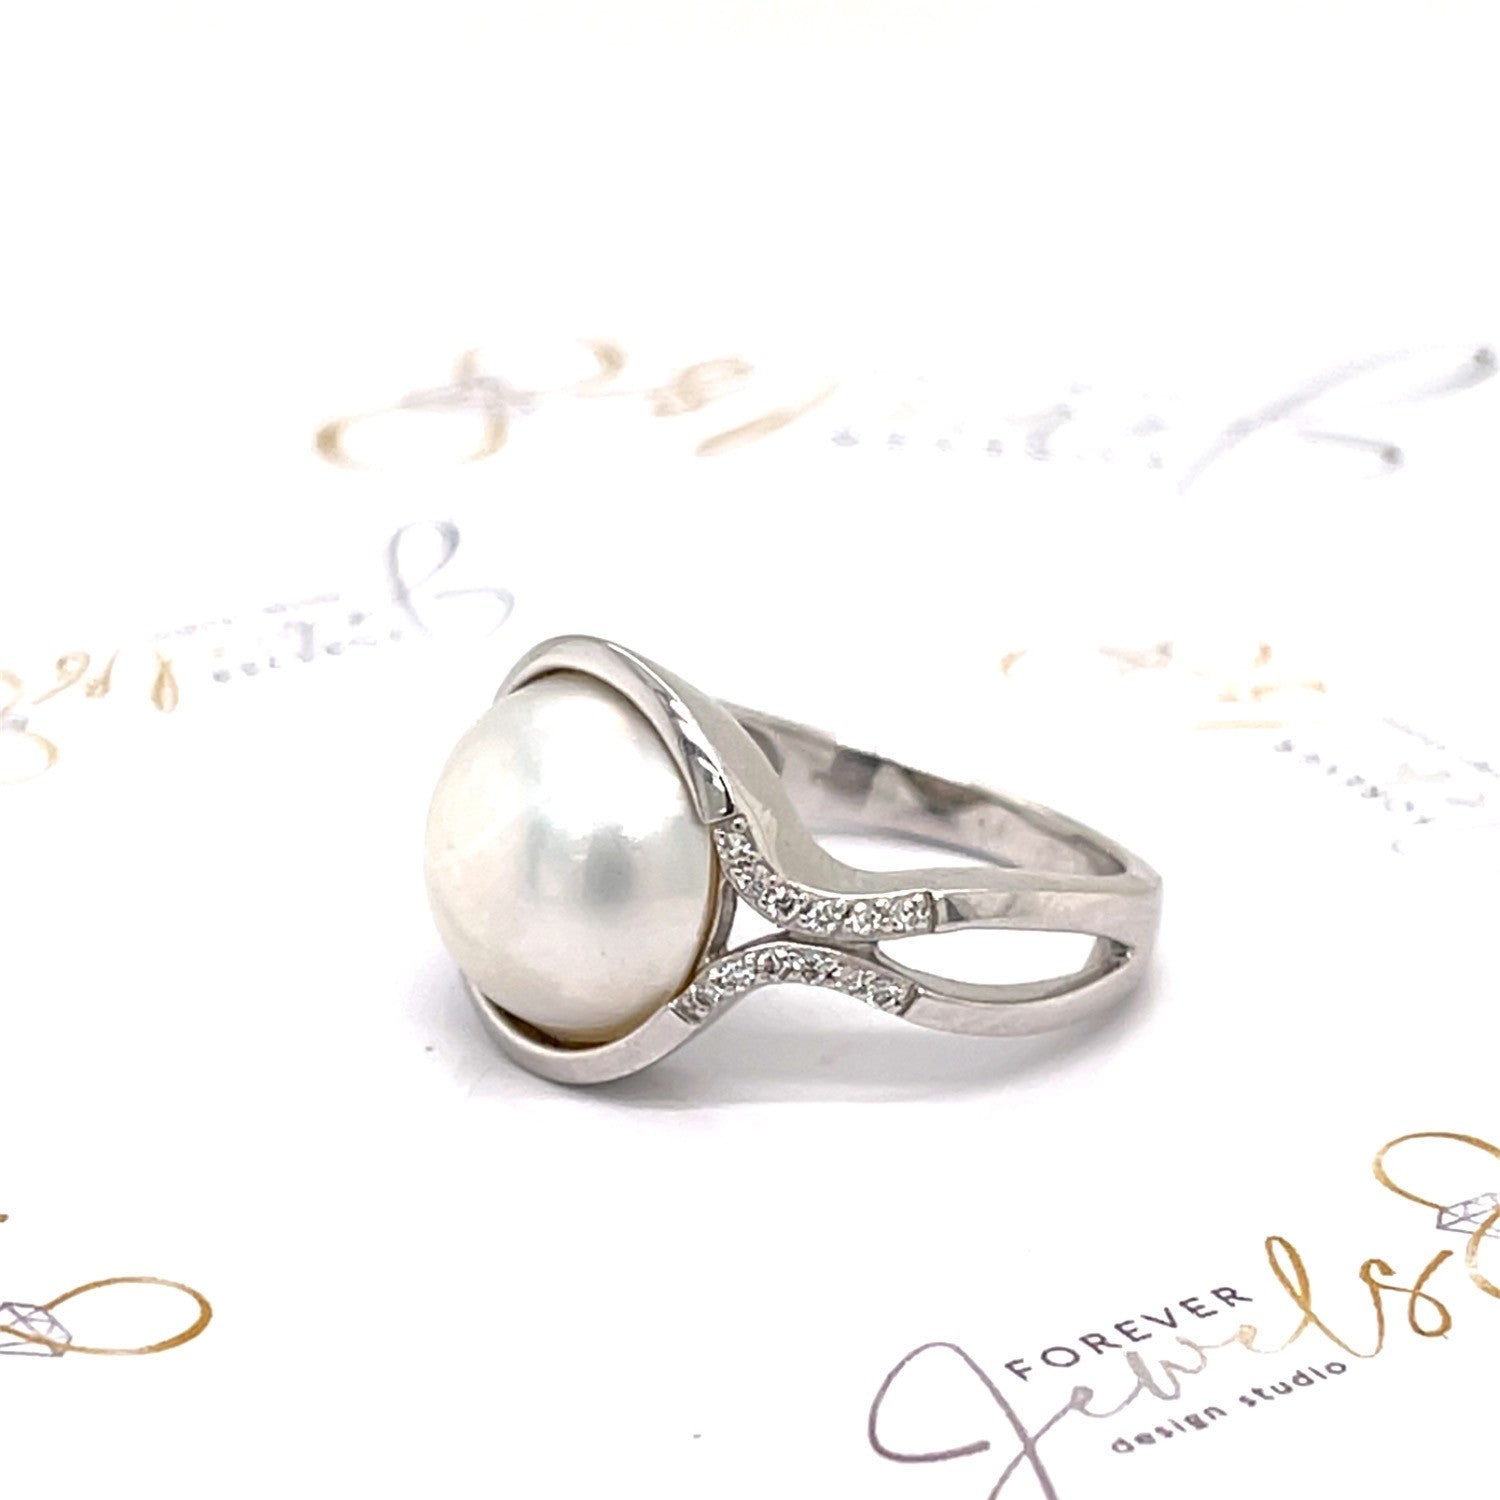 18 carat White gold Pearl Ring - ForeverJewels Design Studio 8